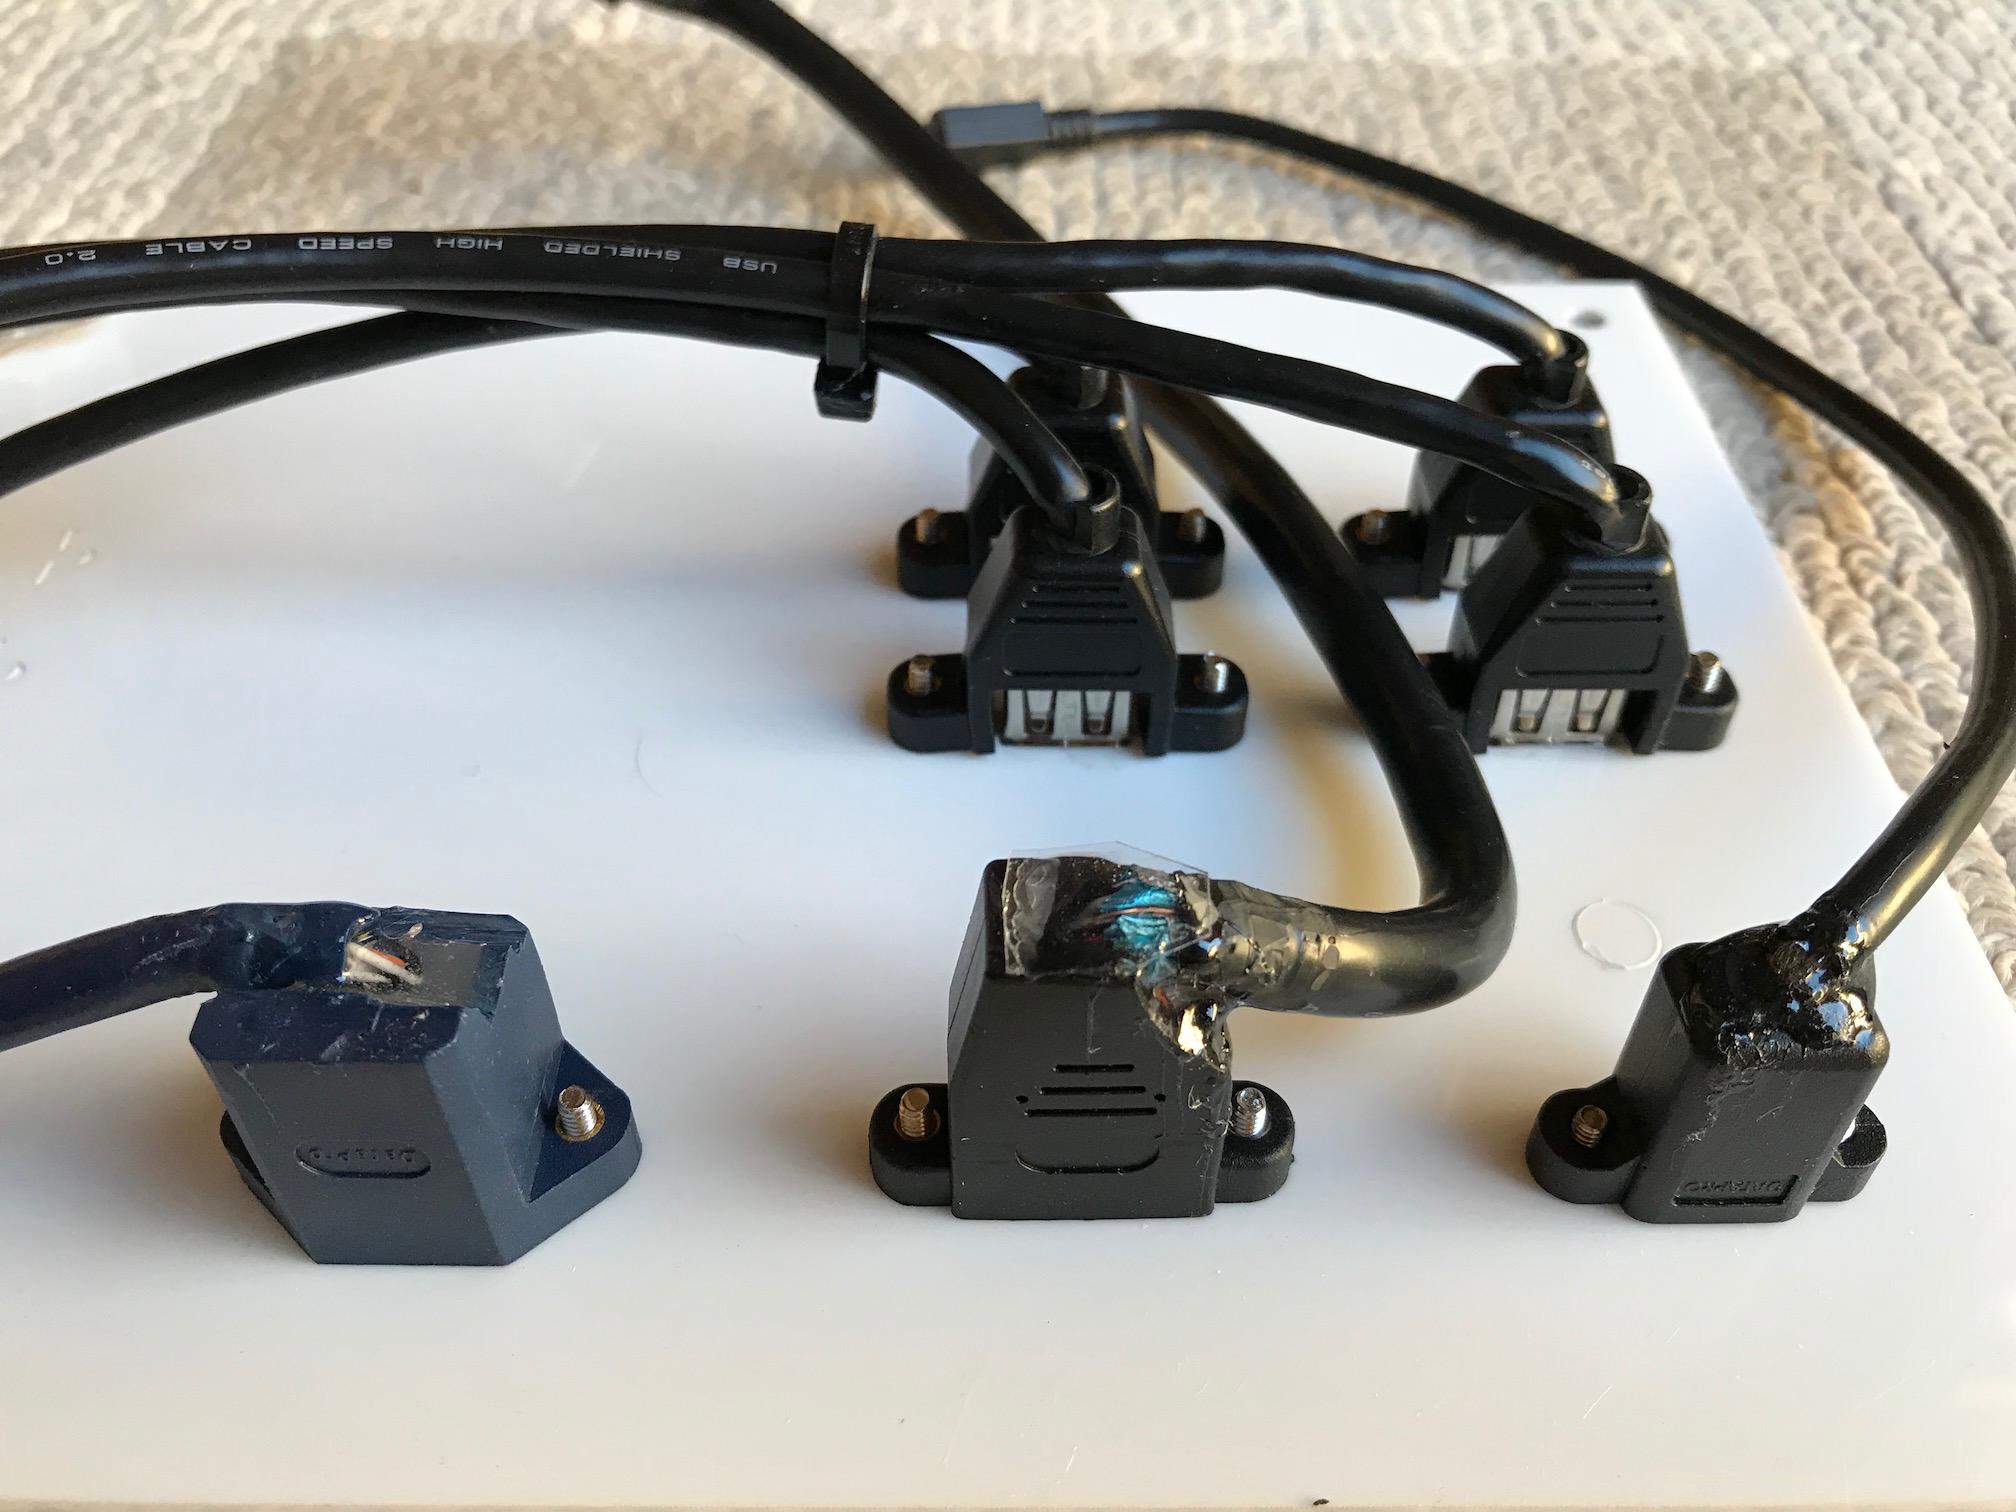 connectors.jpg